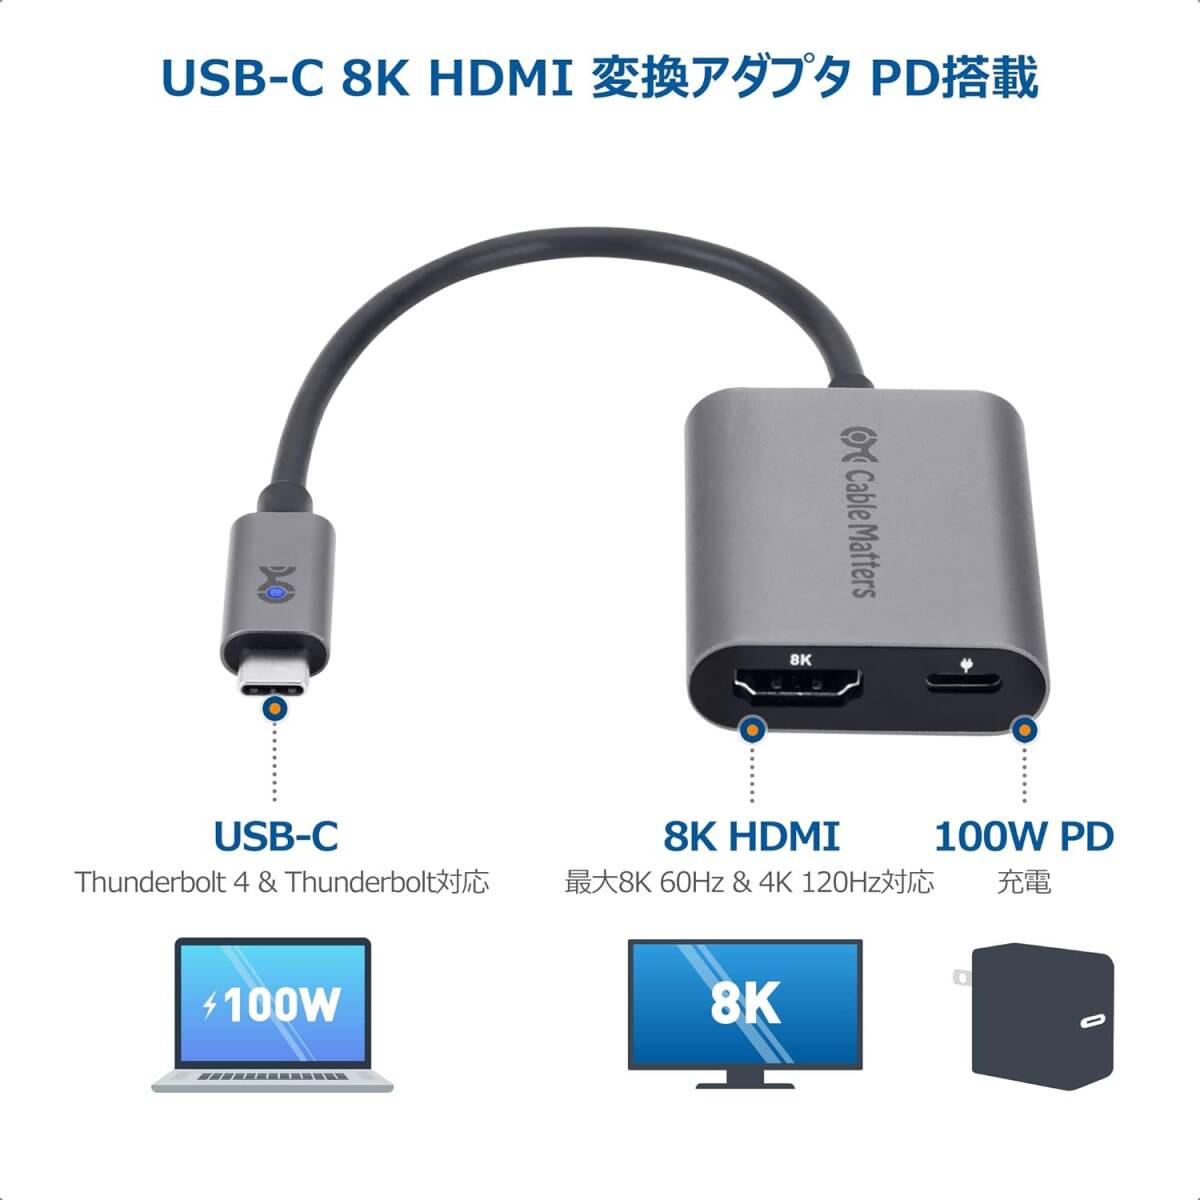 Cable Matters 48Gbps USB Type C HDMI 100W 4K 120Hz & 8K 60Hz HDR/Thunderbolt 4 & Thunderbolt 3対応/Macbookで最大4K@60Hz対応